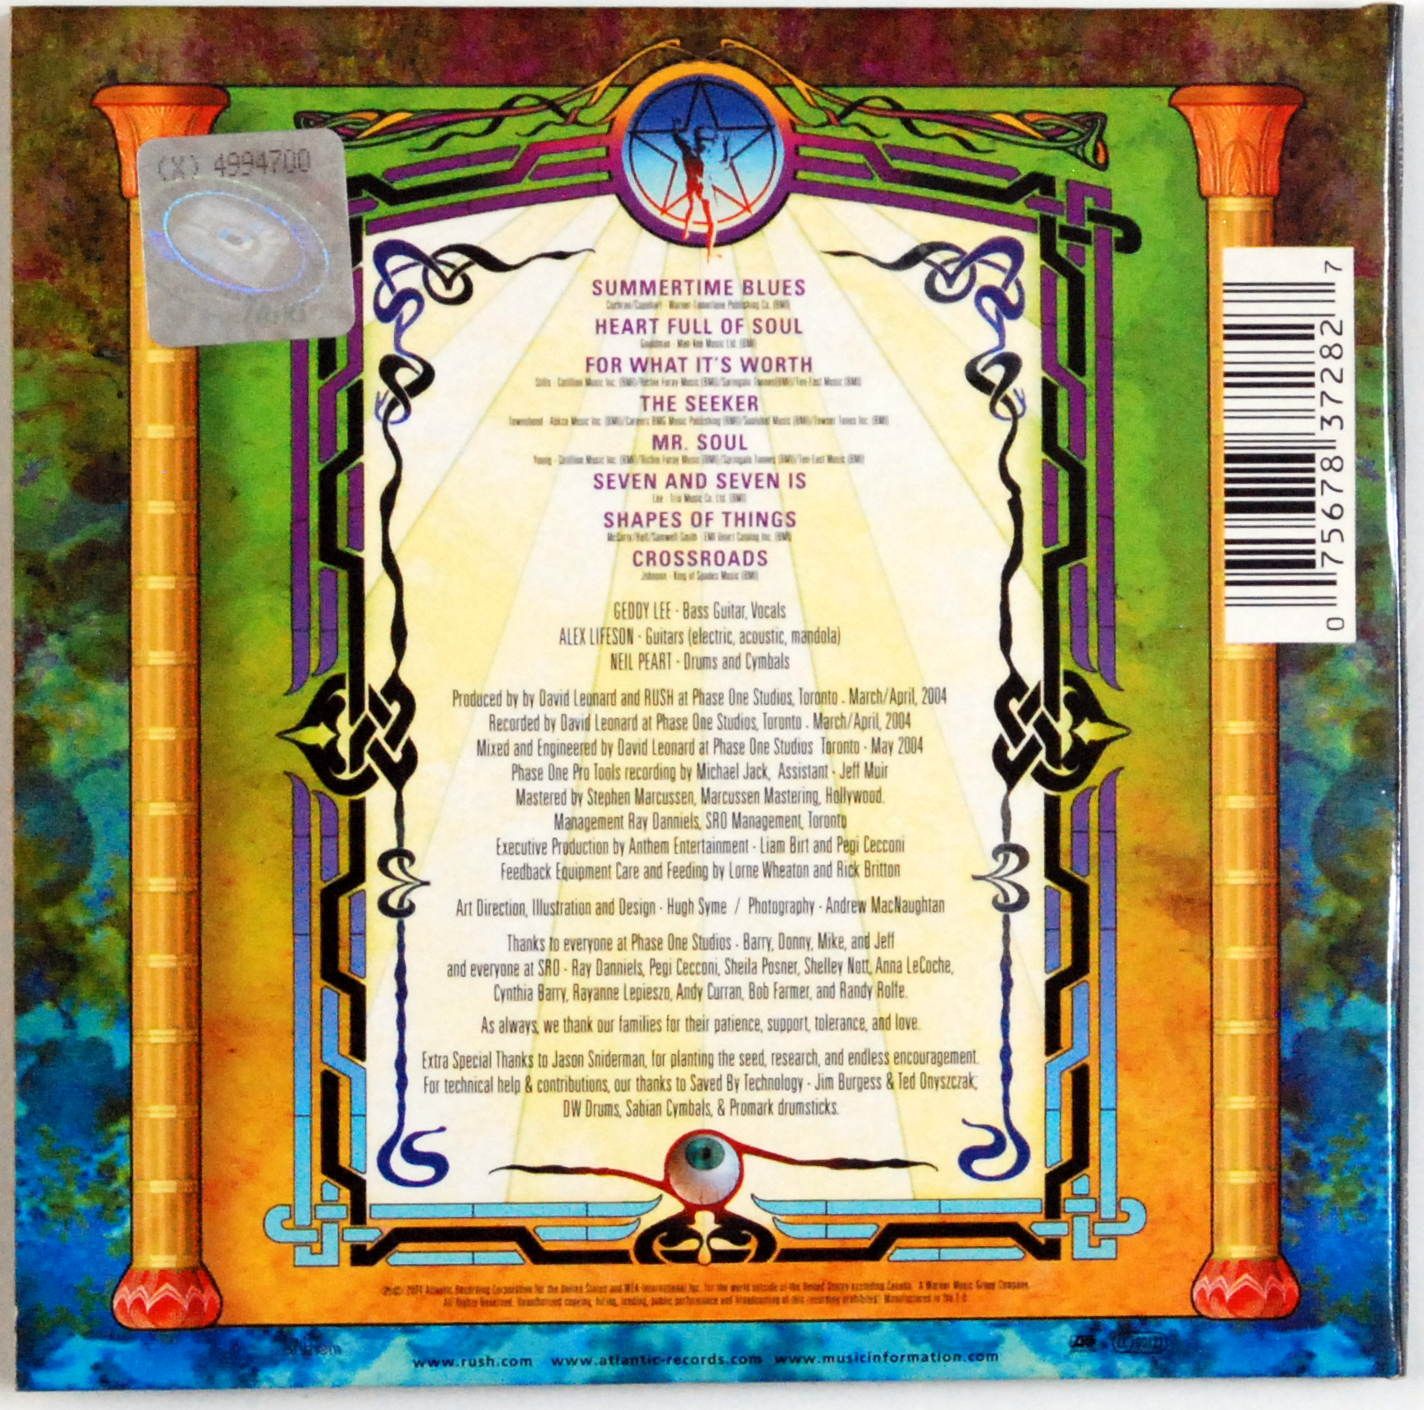 (CD) Rush - Feedback